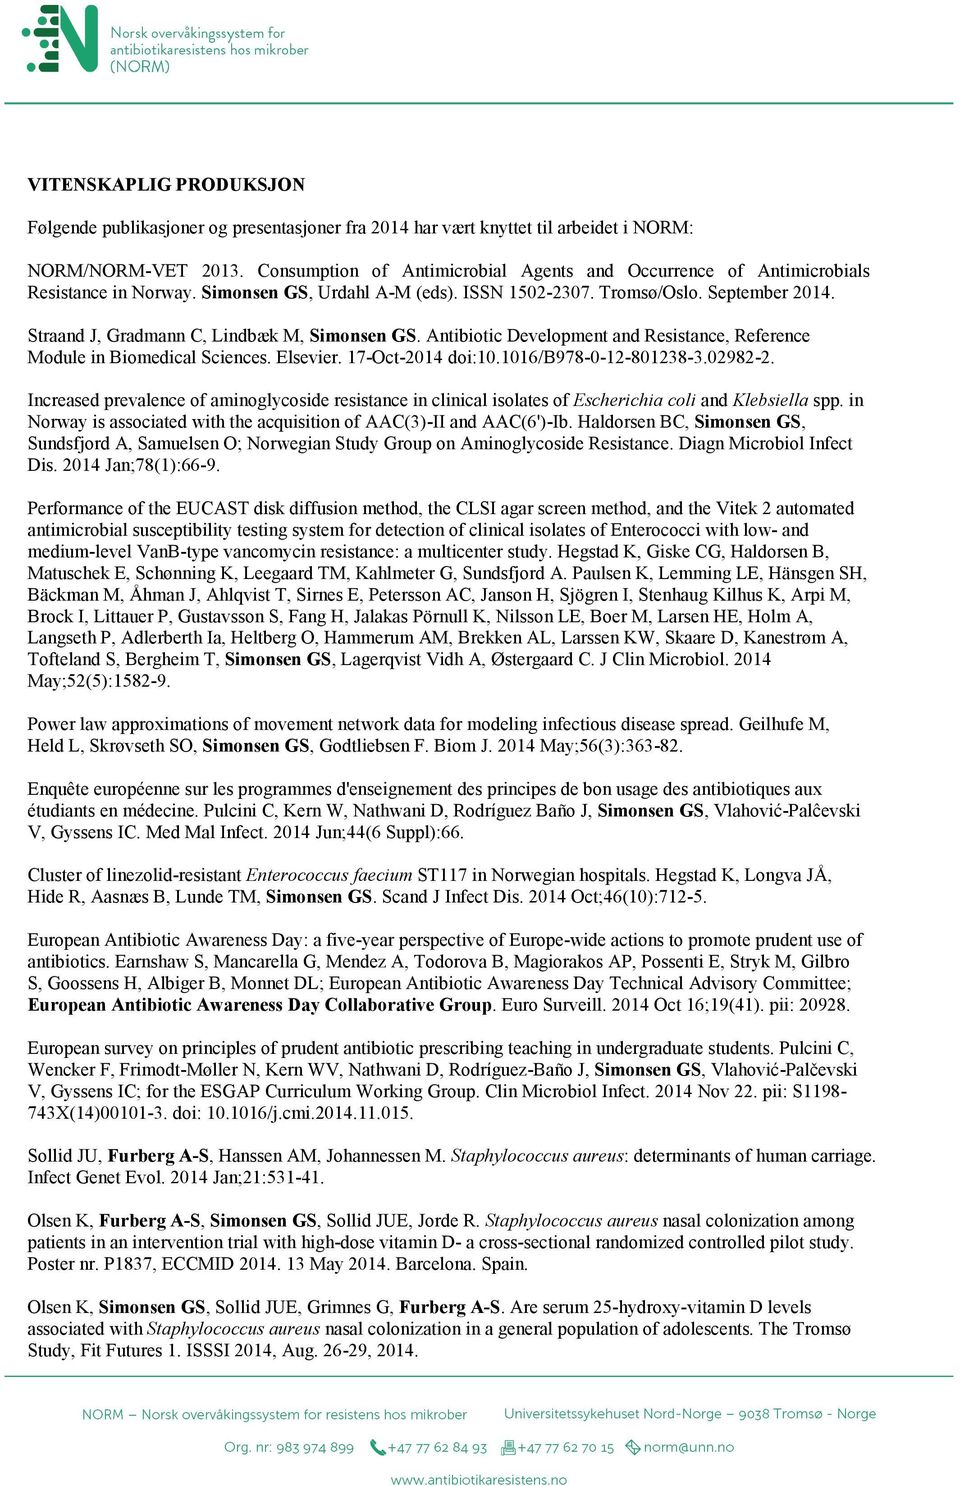 Straand J, Gradmann C, Lindbæk M, Simonsen GS. Antibiotic Development and Resistance, Reference Module in Biomedical Sciences. Elsevier. 17-Oct-2014 doi:10.1016/b978-0-12-801238-3.02982-2.